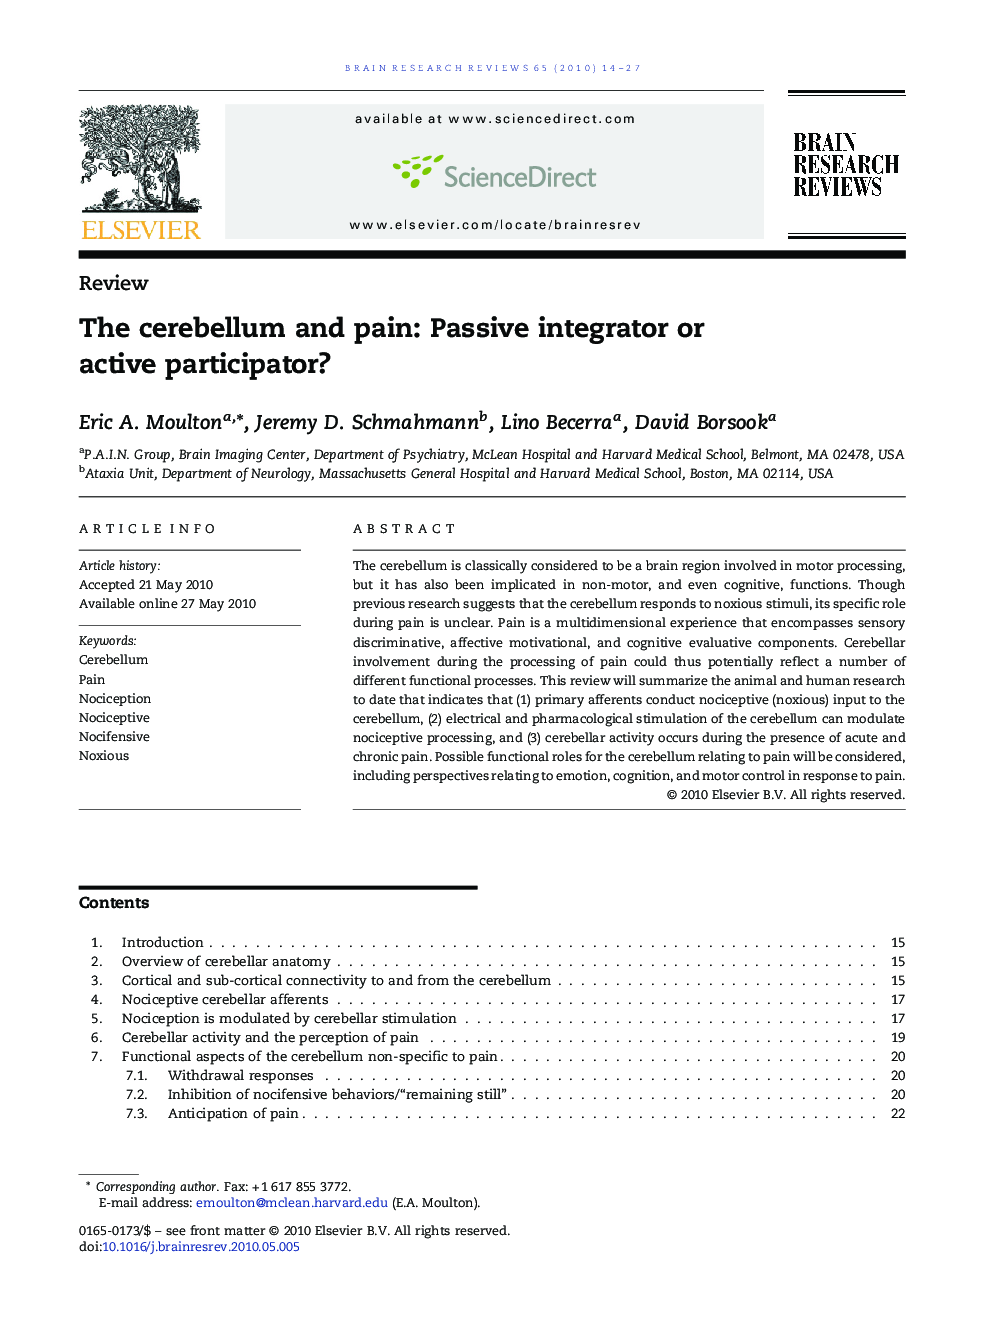 The cerebellum and pain: Passive integrator or active participator?